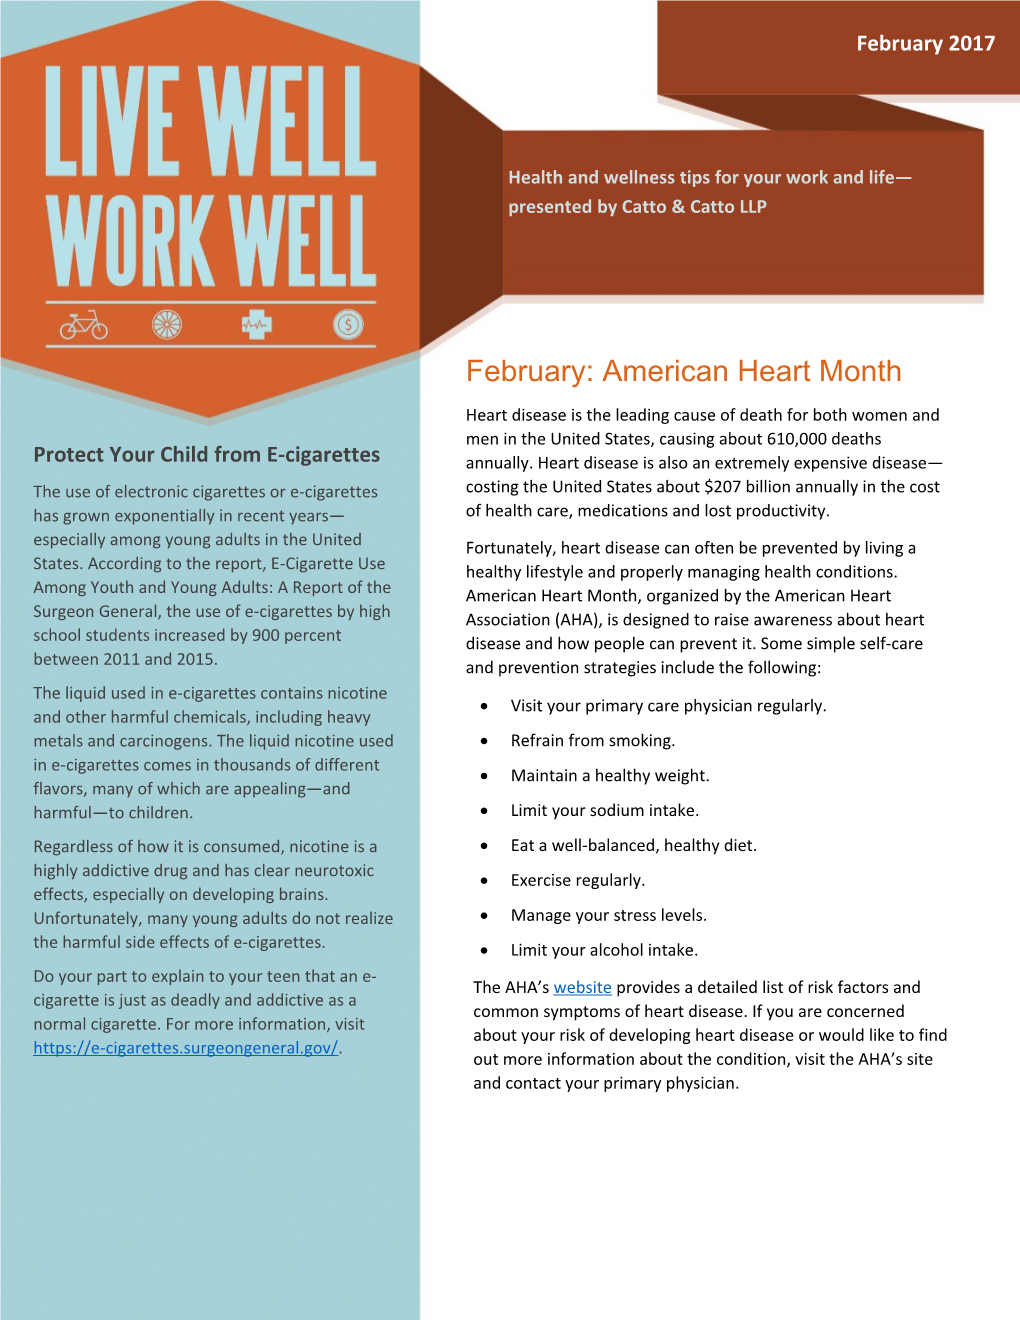 February: American Heart Month